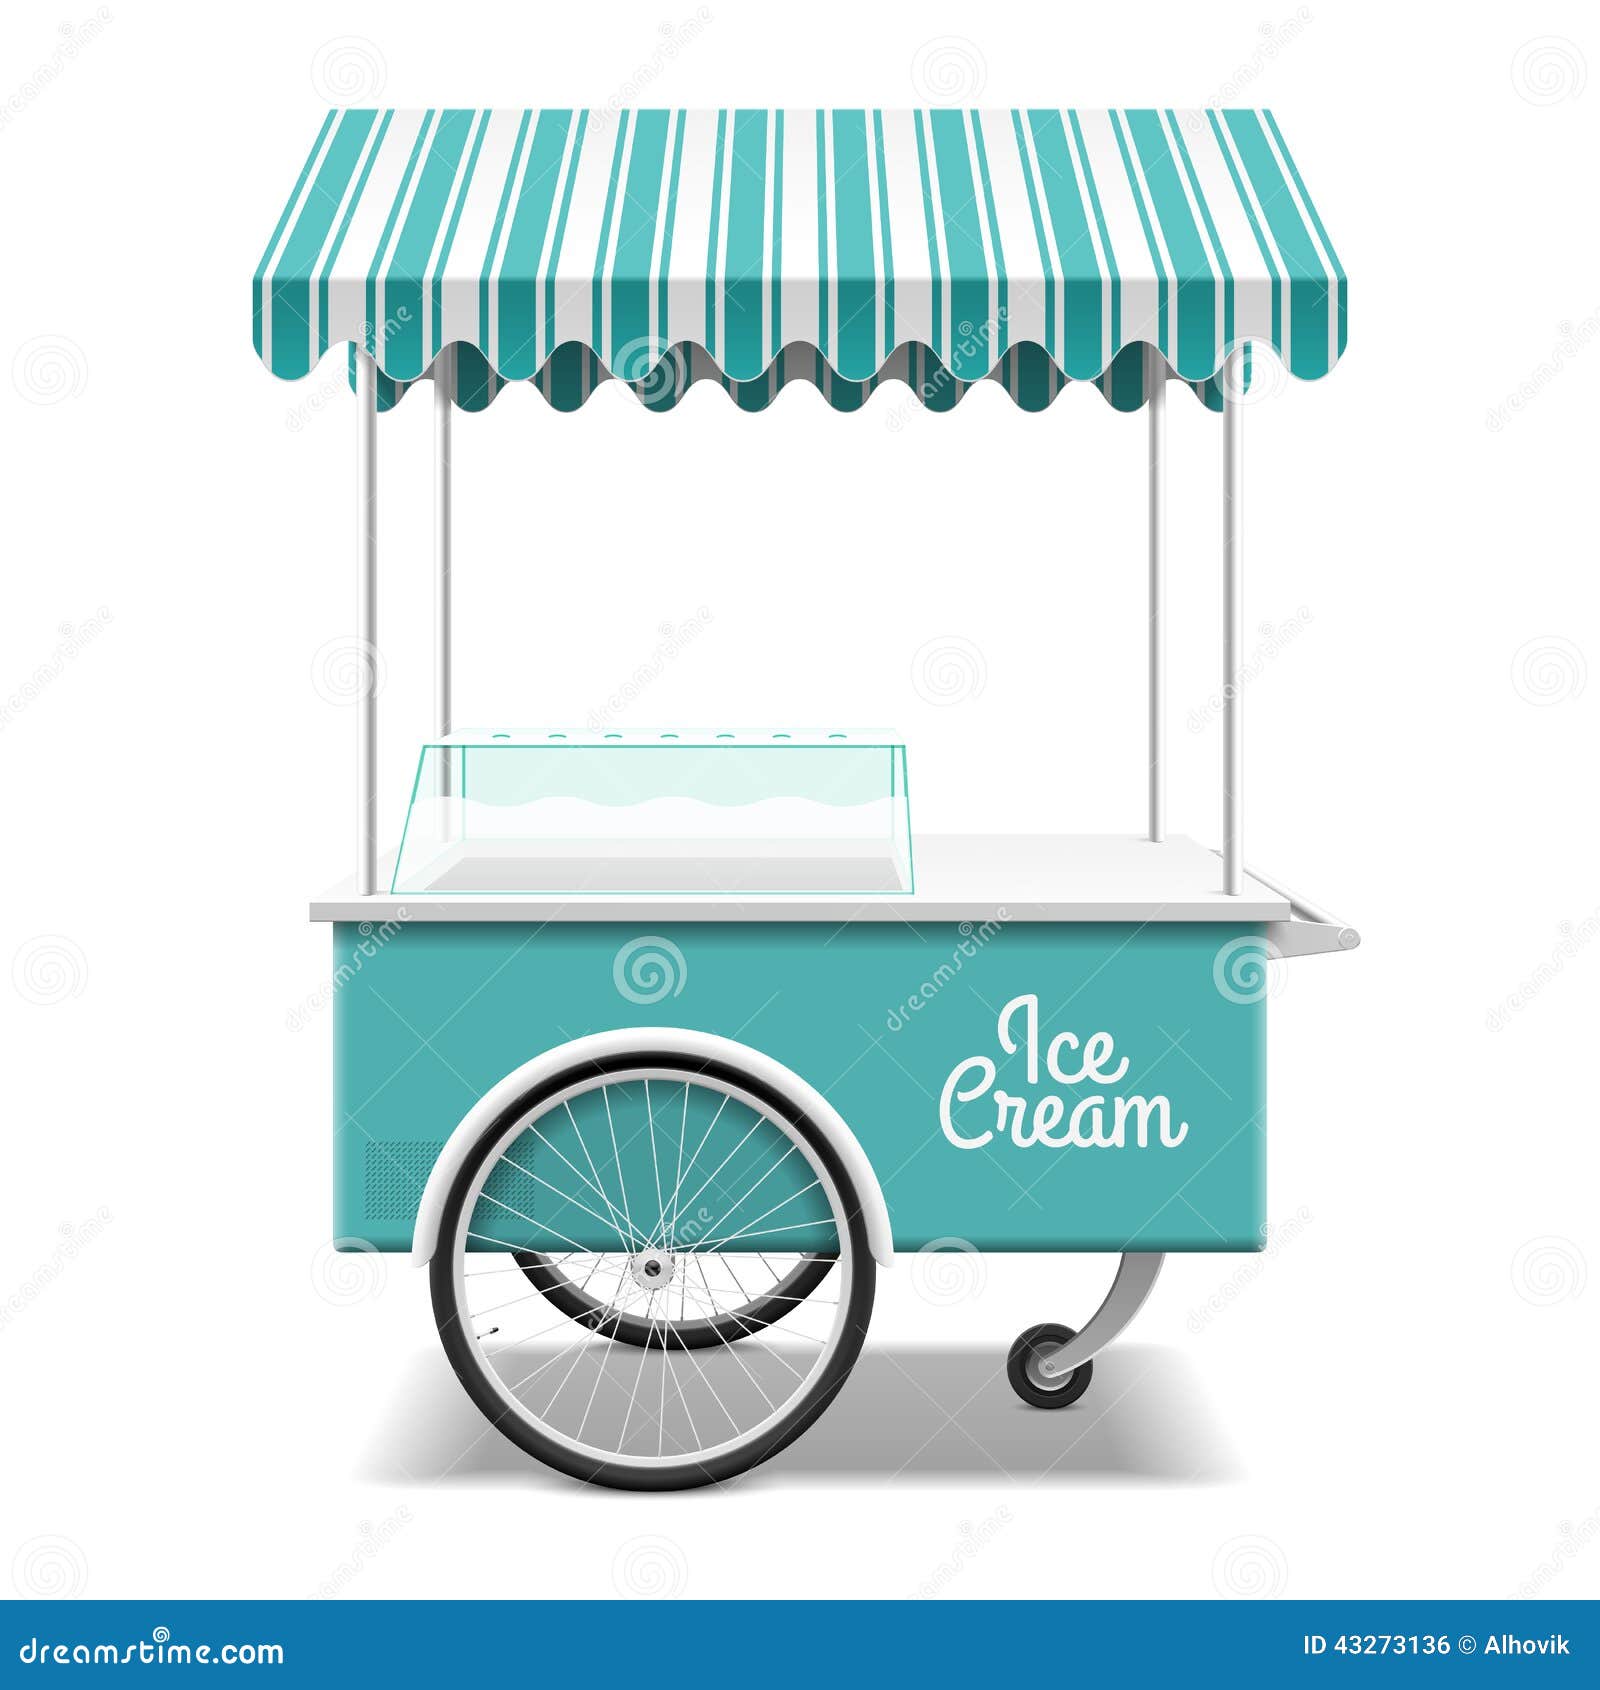 ice cream stand clipart - photo #22